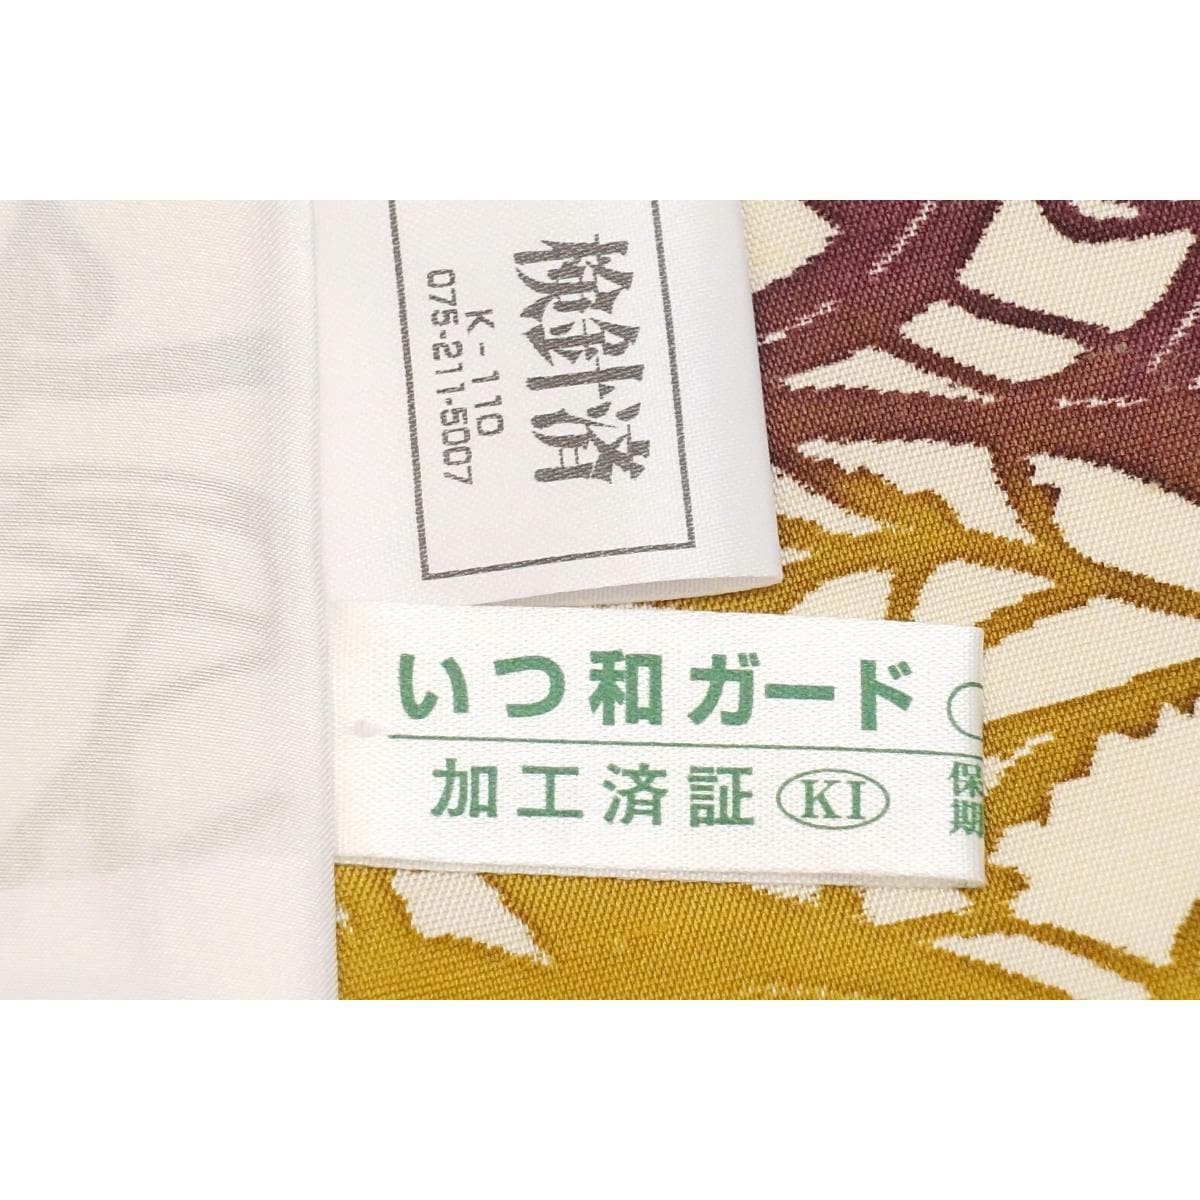 [Unused items] Single garment dyed pongee